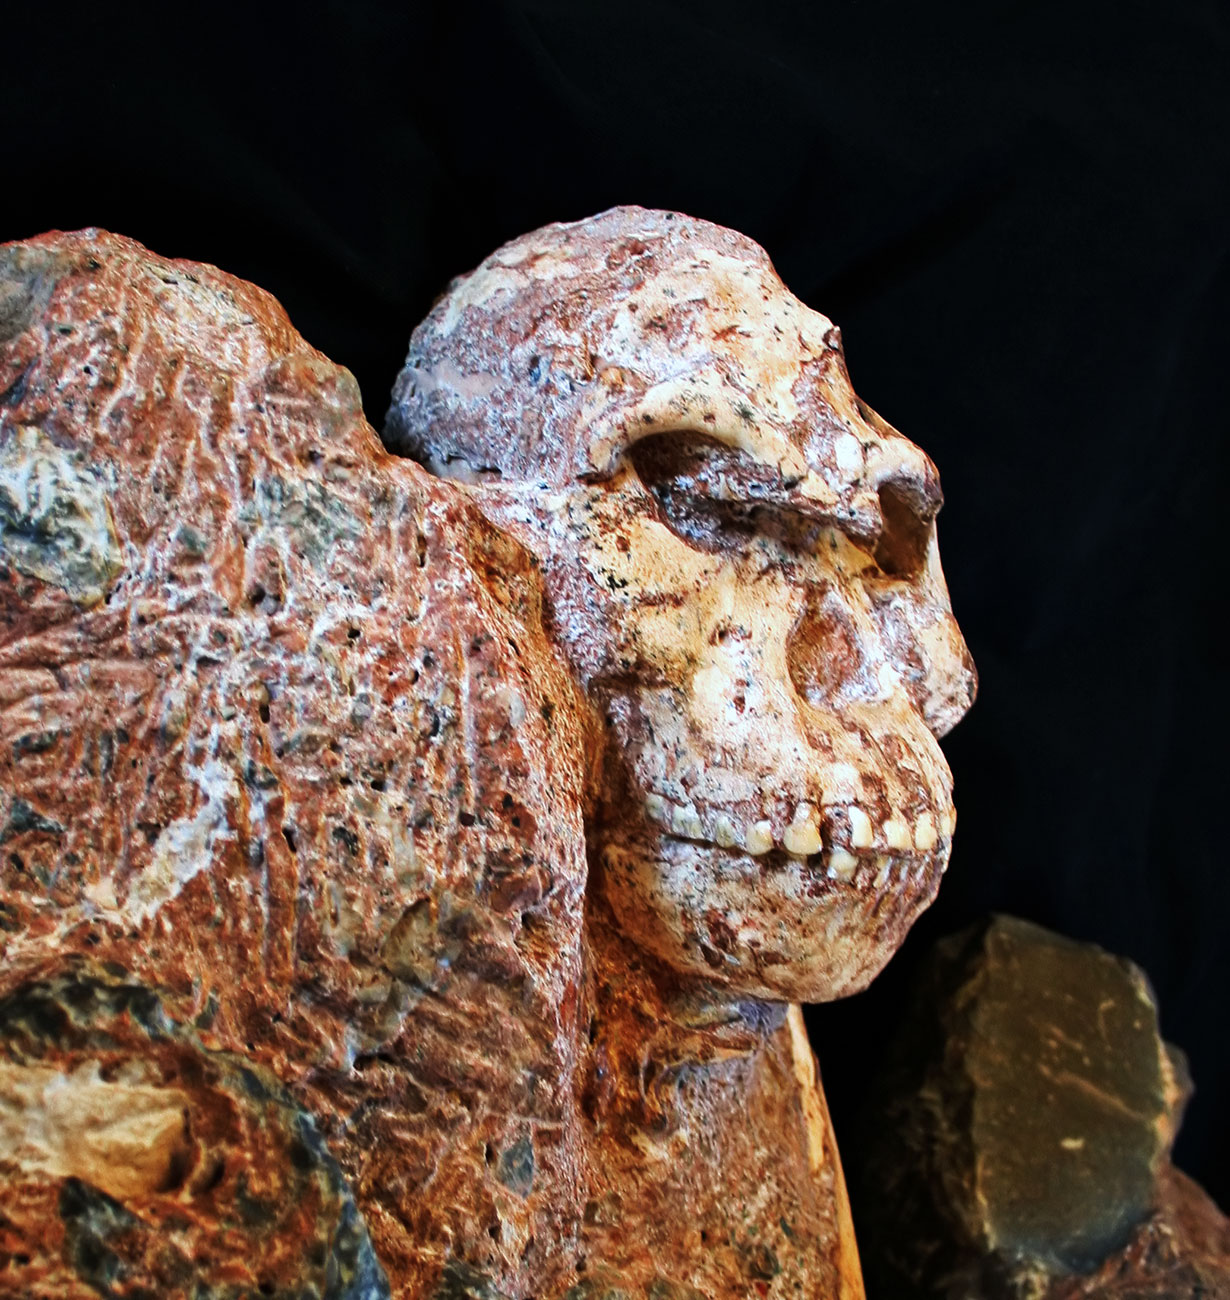 A megkövesedett koponya (Witwatersrand Egyetem)